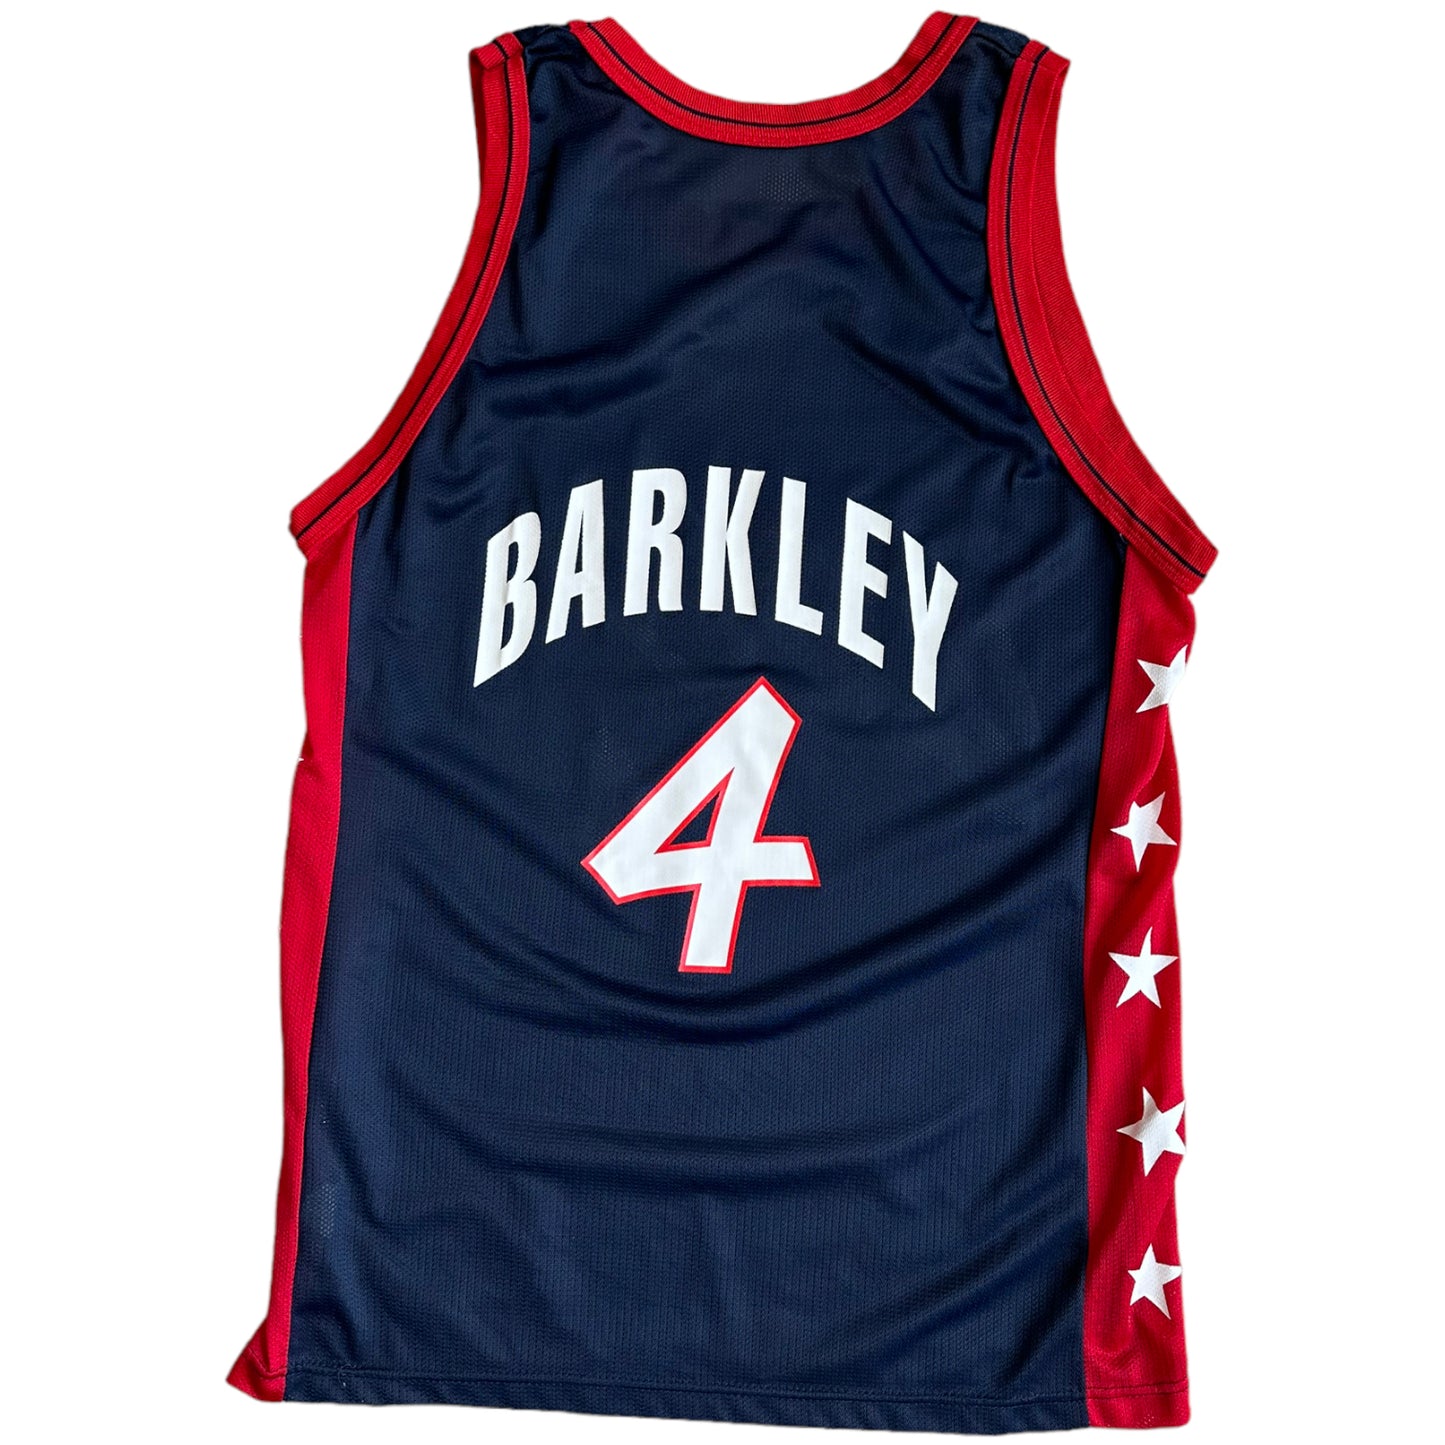 Charles Barkley Dream Team Champion Jersey- L (jersey size 44)